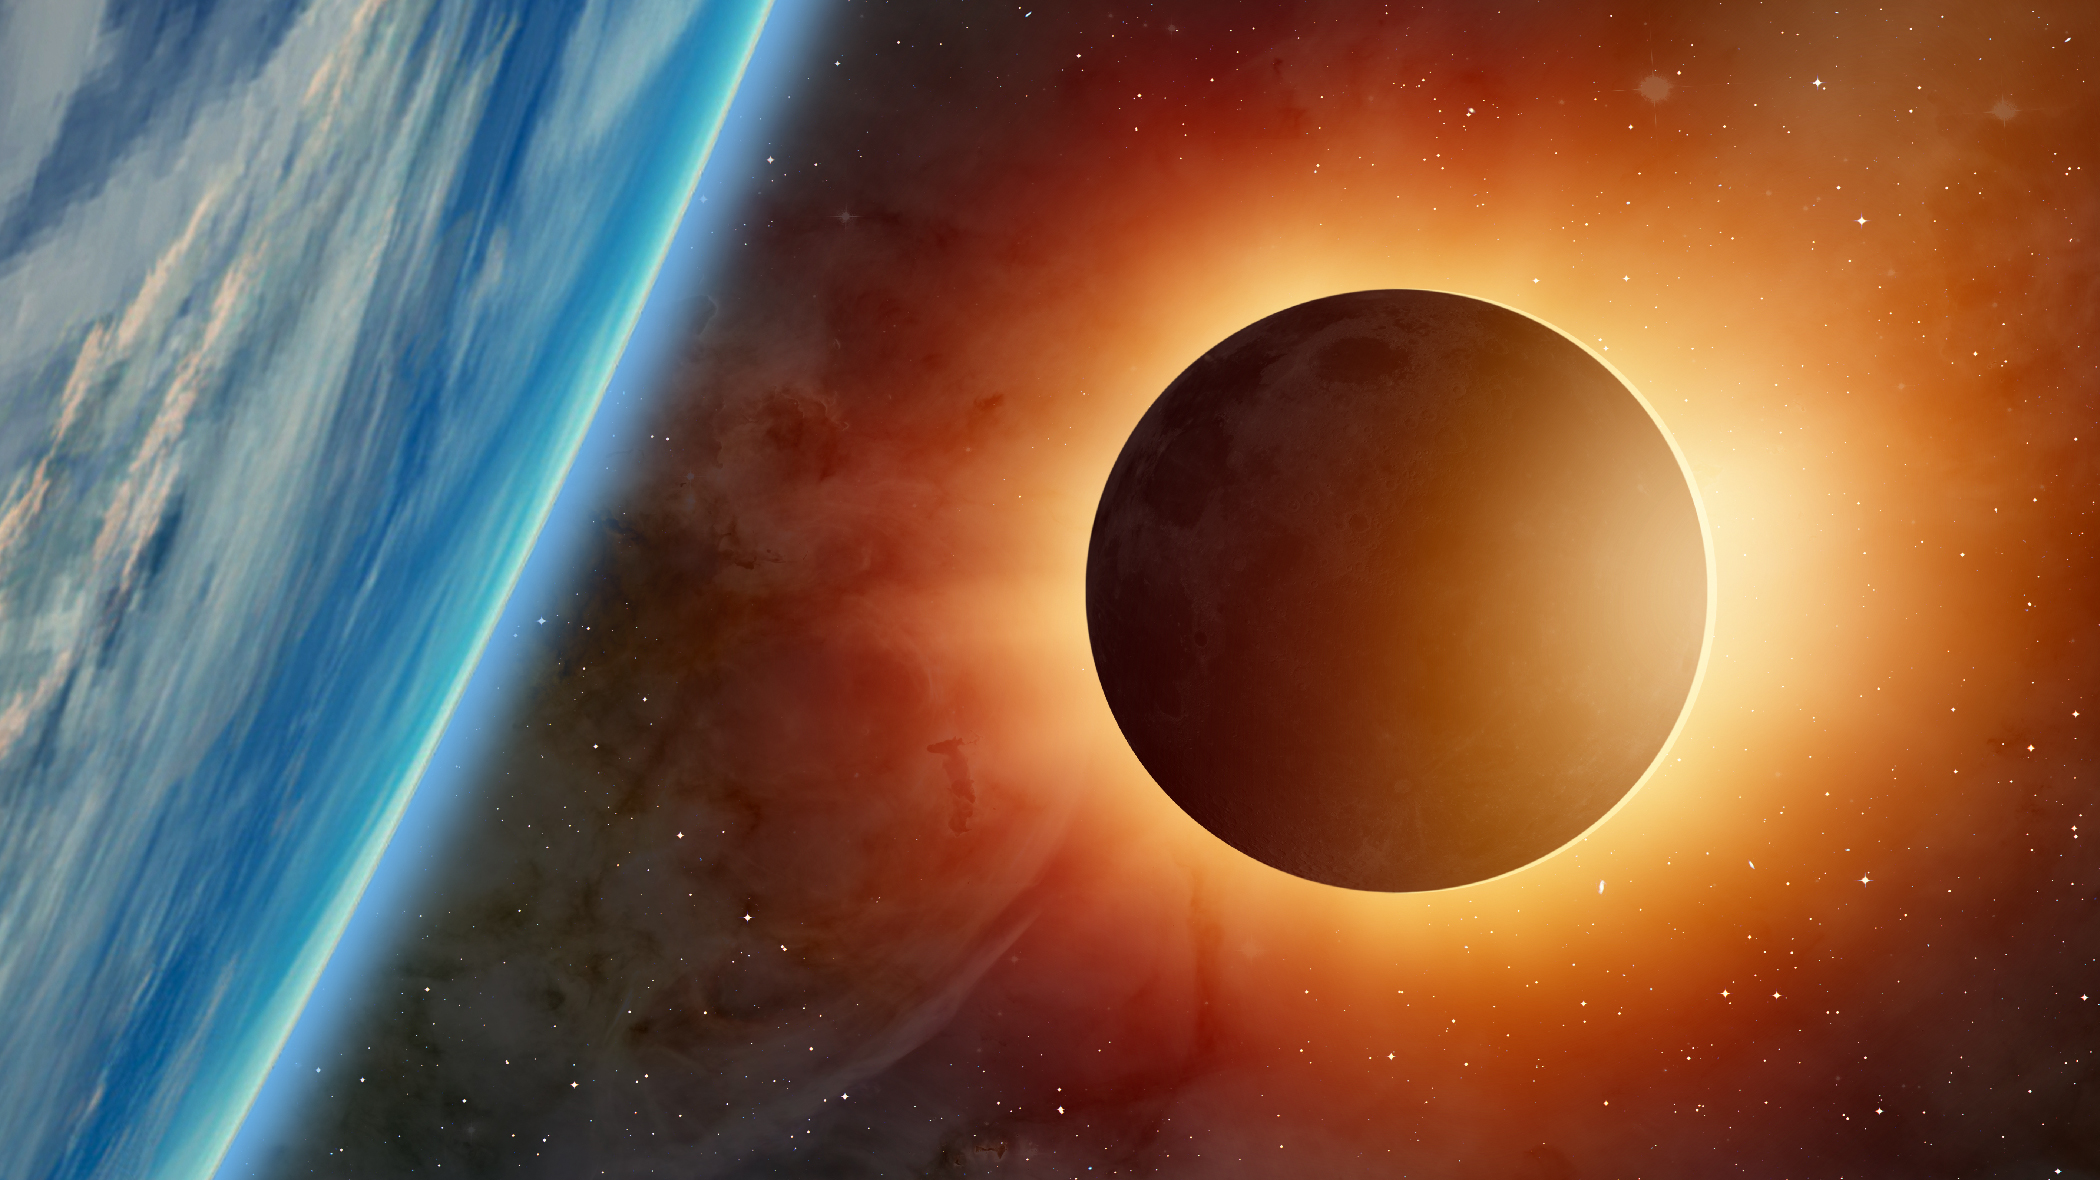 The image of eclipse, showcasing the mesmerizing celestial phenomenon in vivid detail.